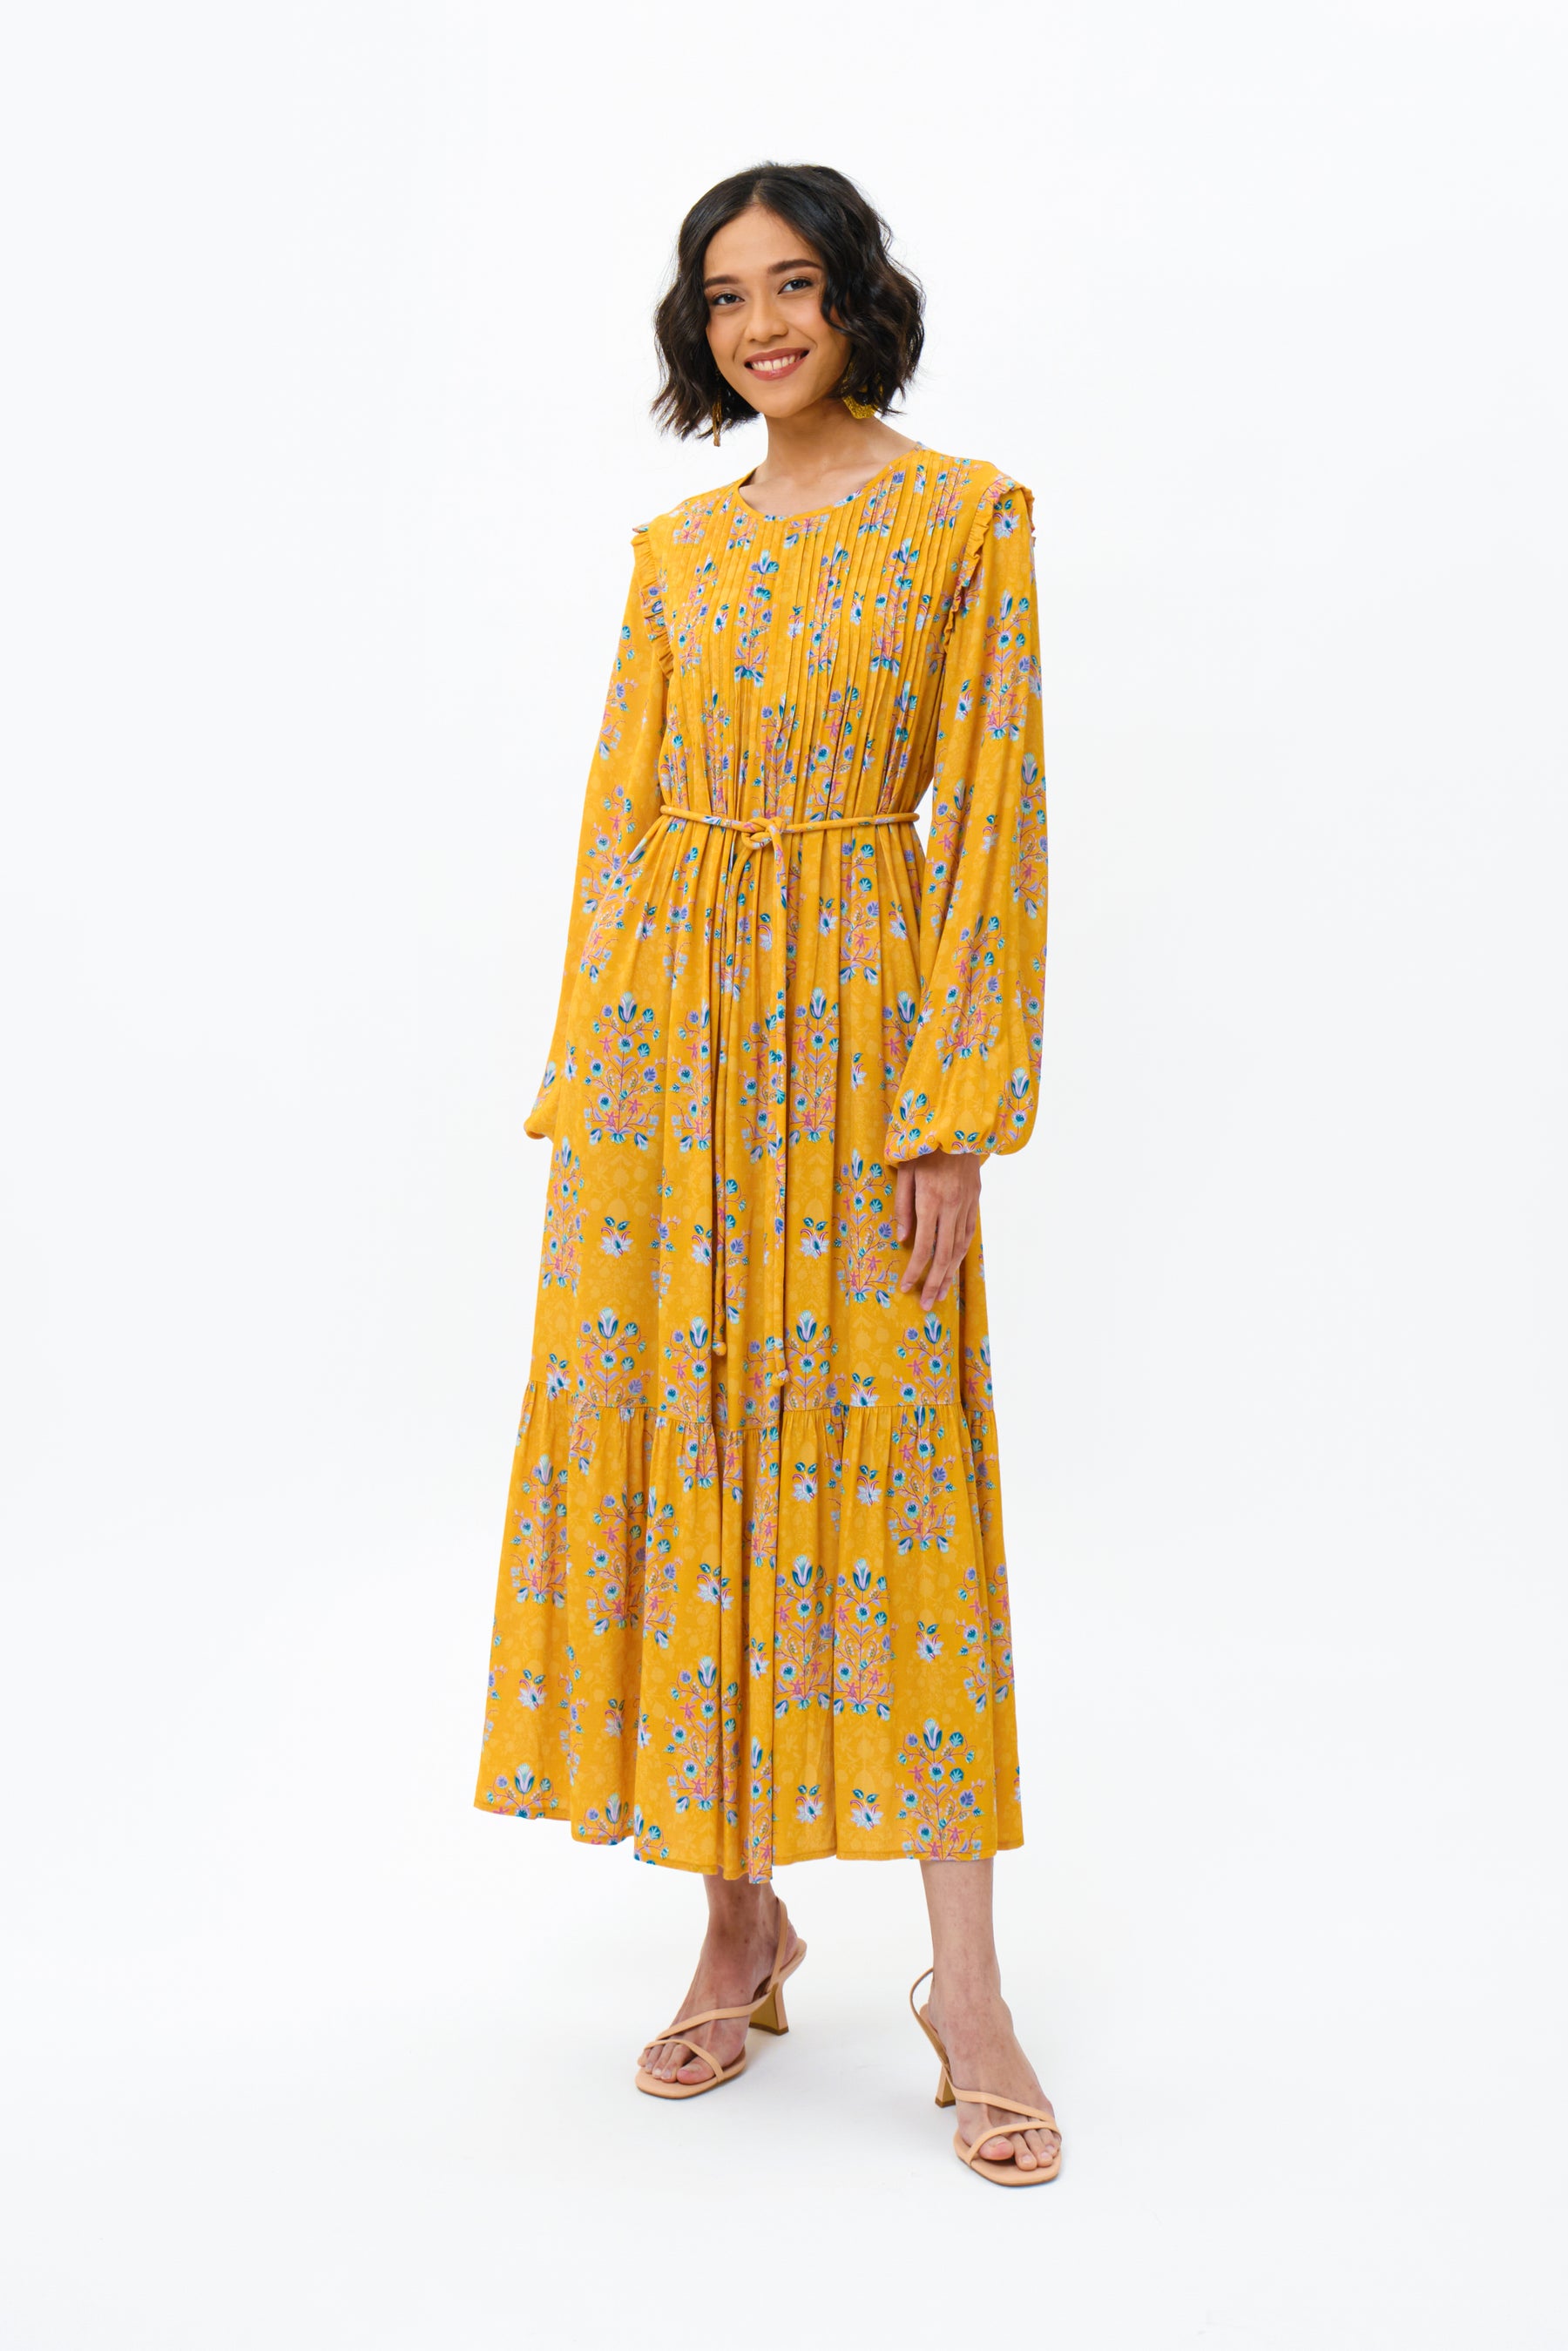 NURA Dress in Yellow Anggrek